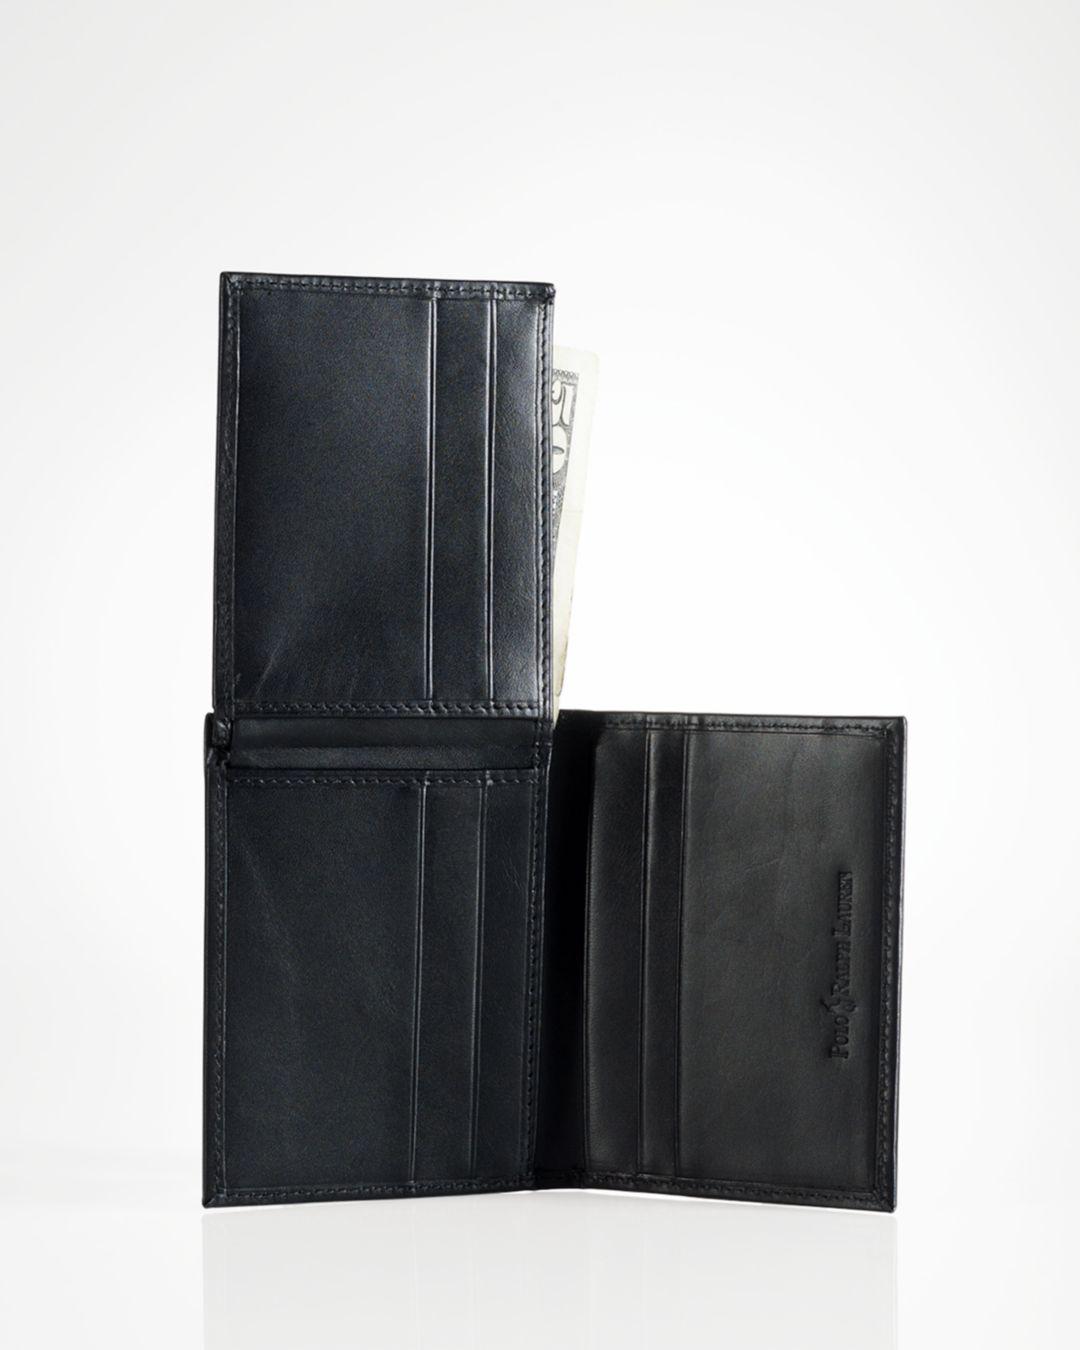 Polo Ralph Lauren Burnished Leather Window Billfold Wallet in Black for Men - Lyst